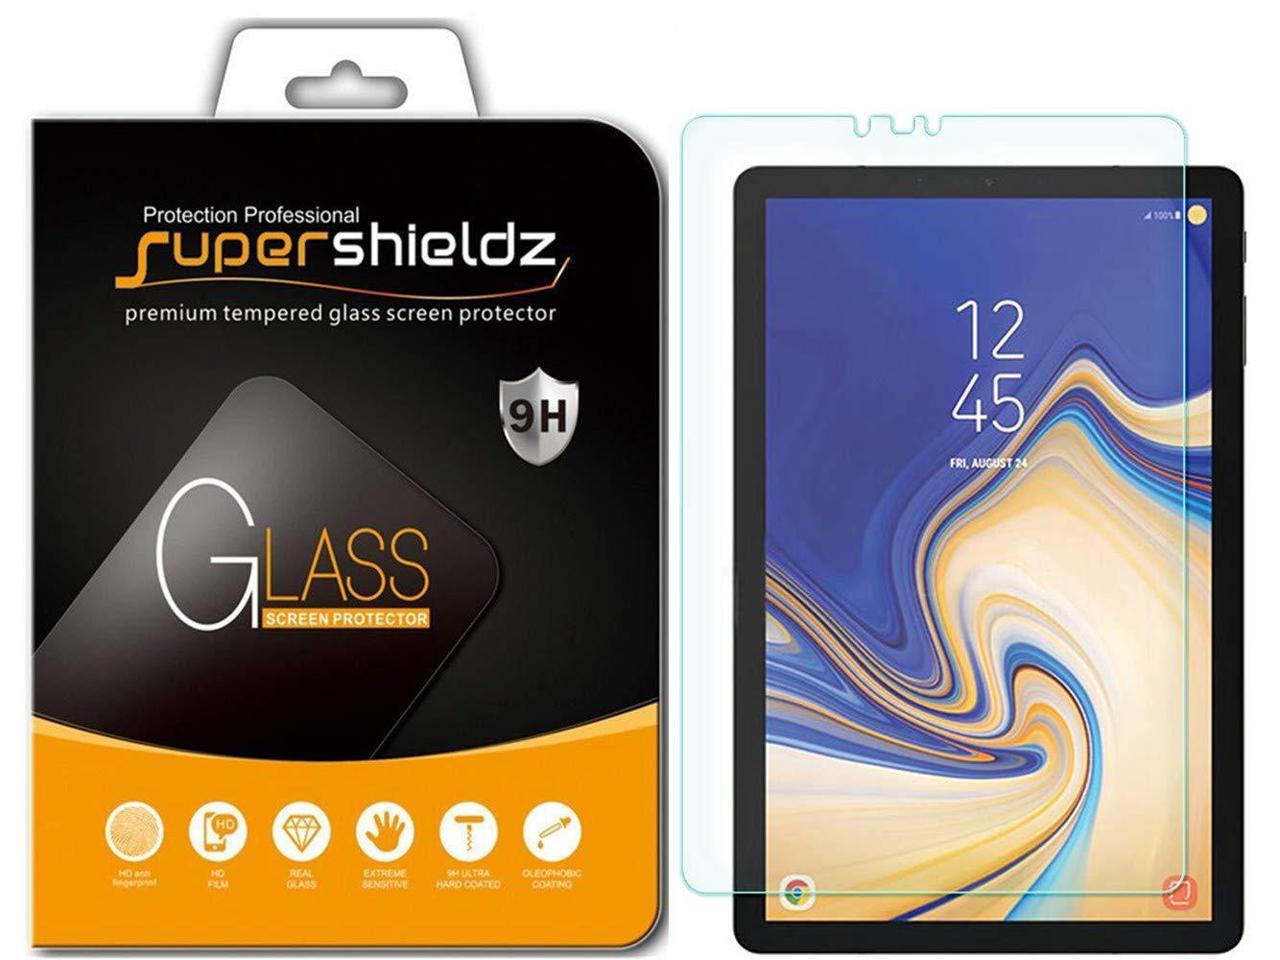 Supershieldz Tempered Glass Screen Protector Saver for Verizon GizmoTab 